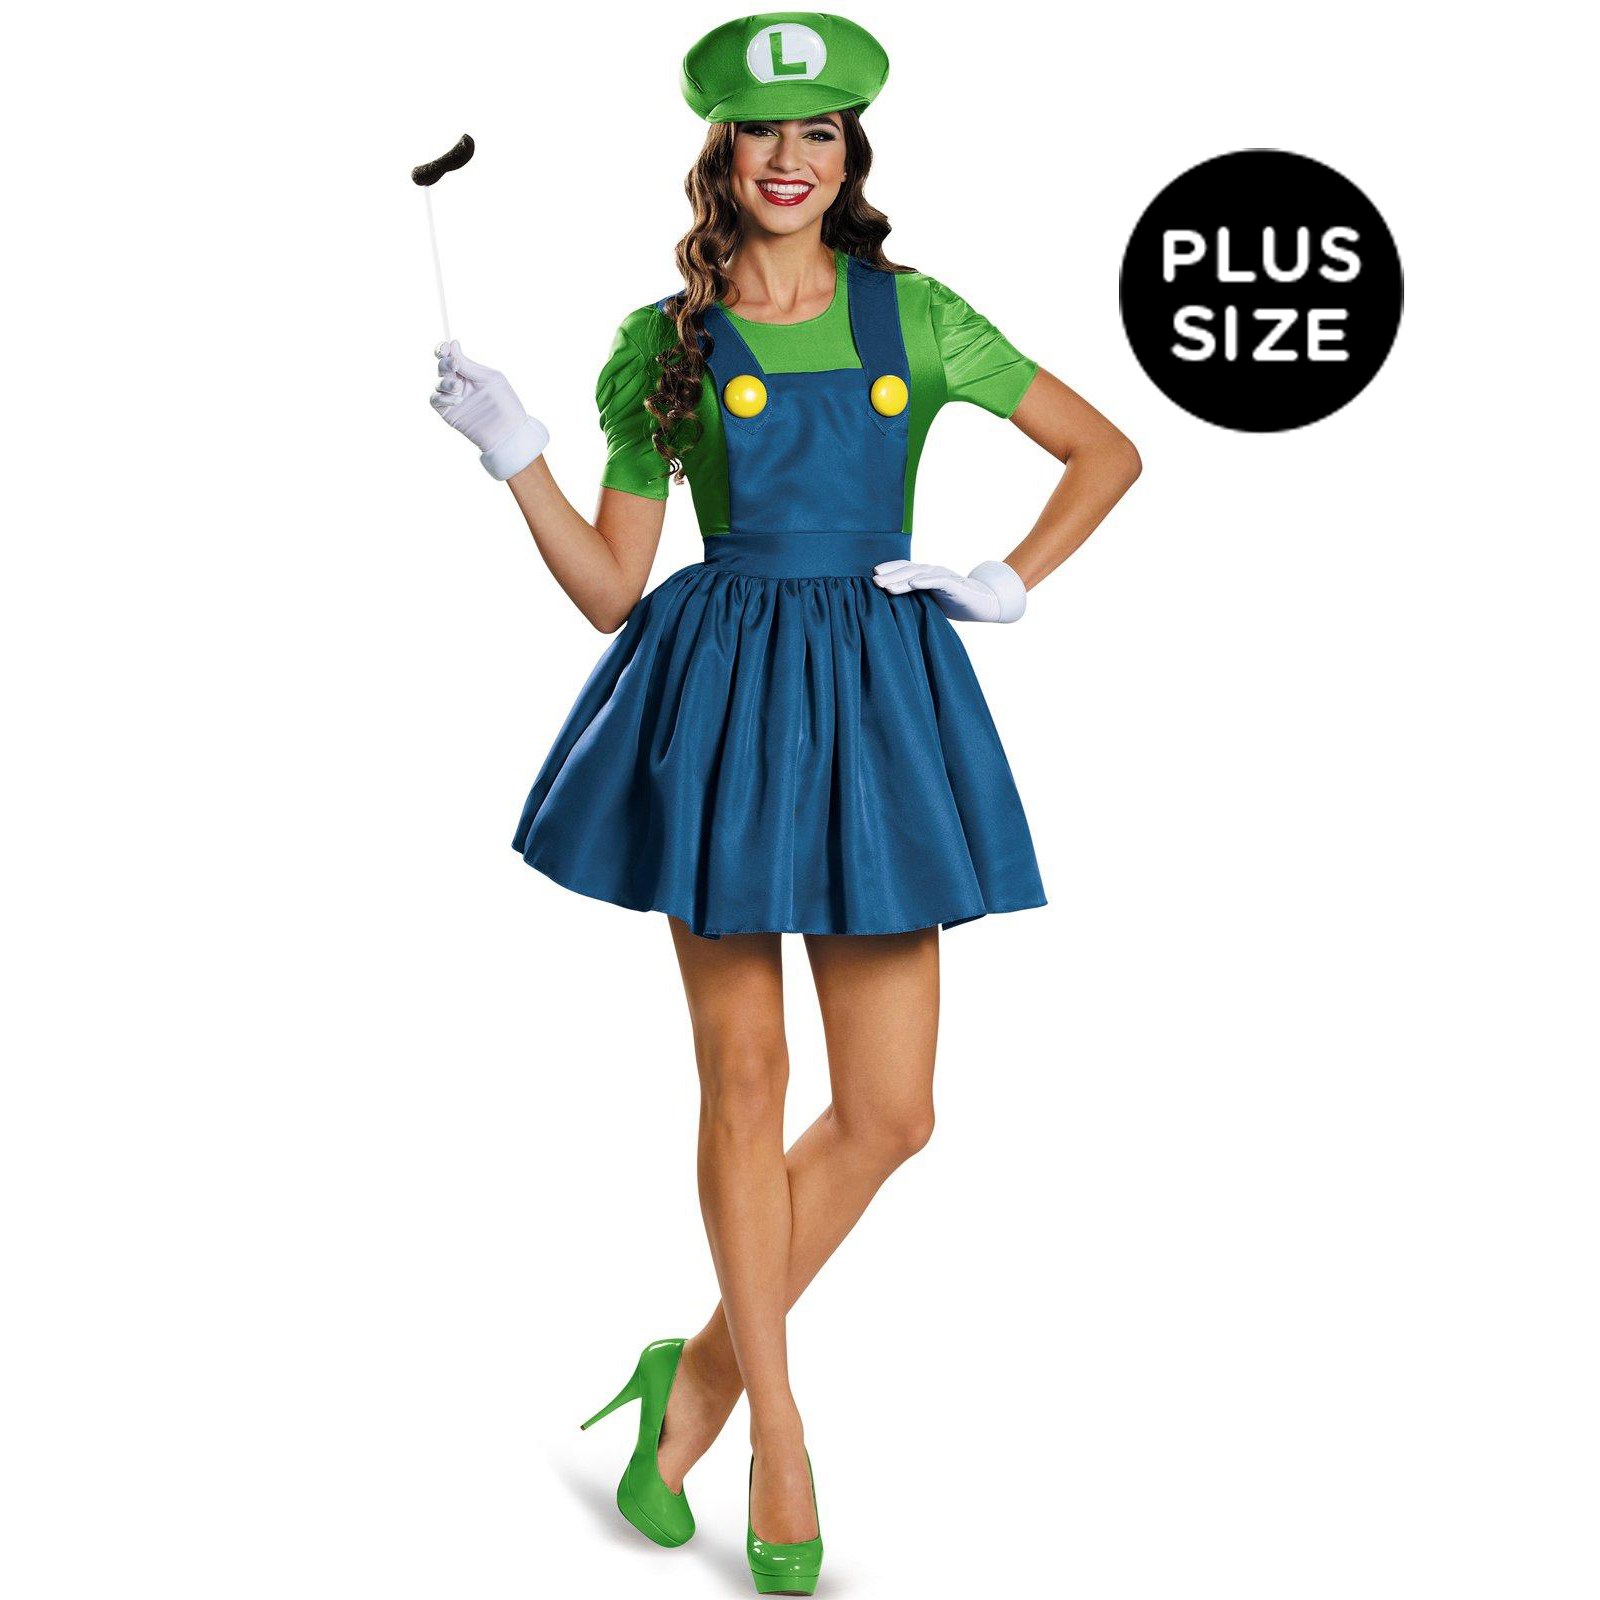 Super Mario: Plus Size Luigi Costume With Skirt For Women